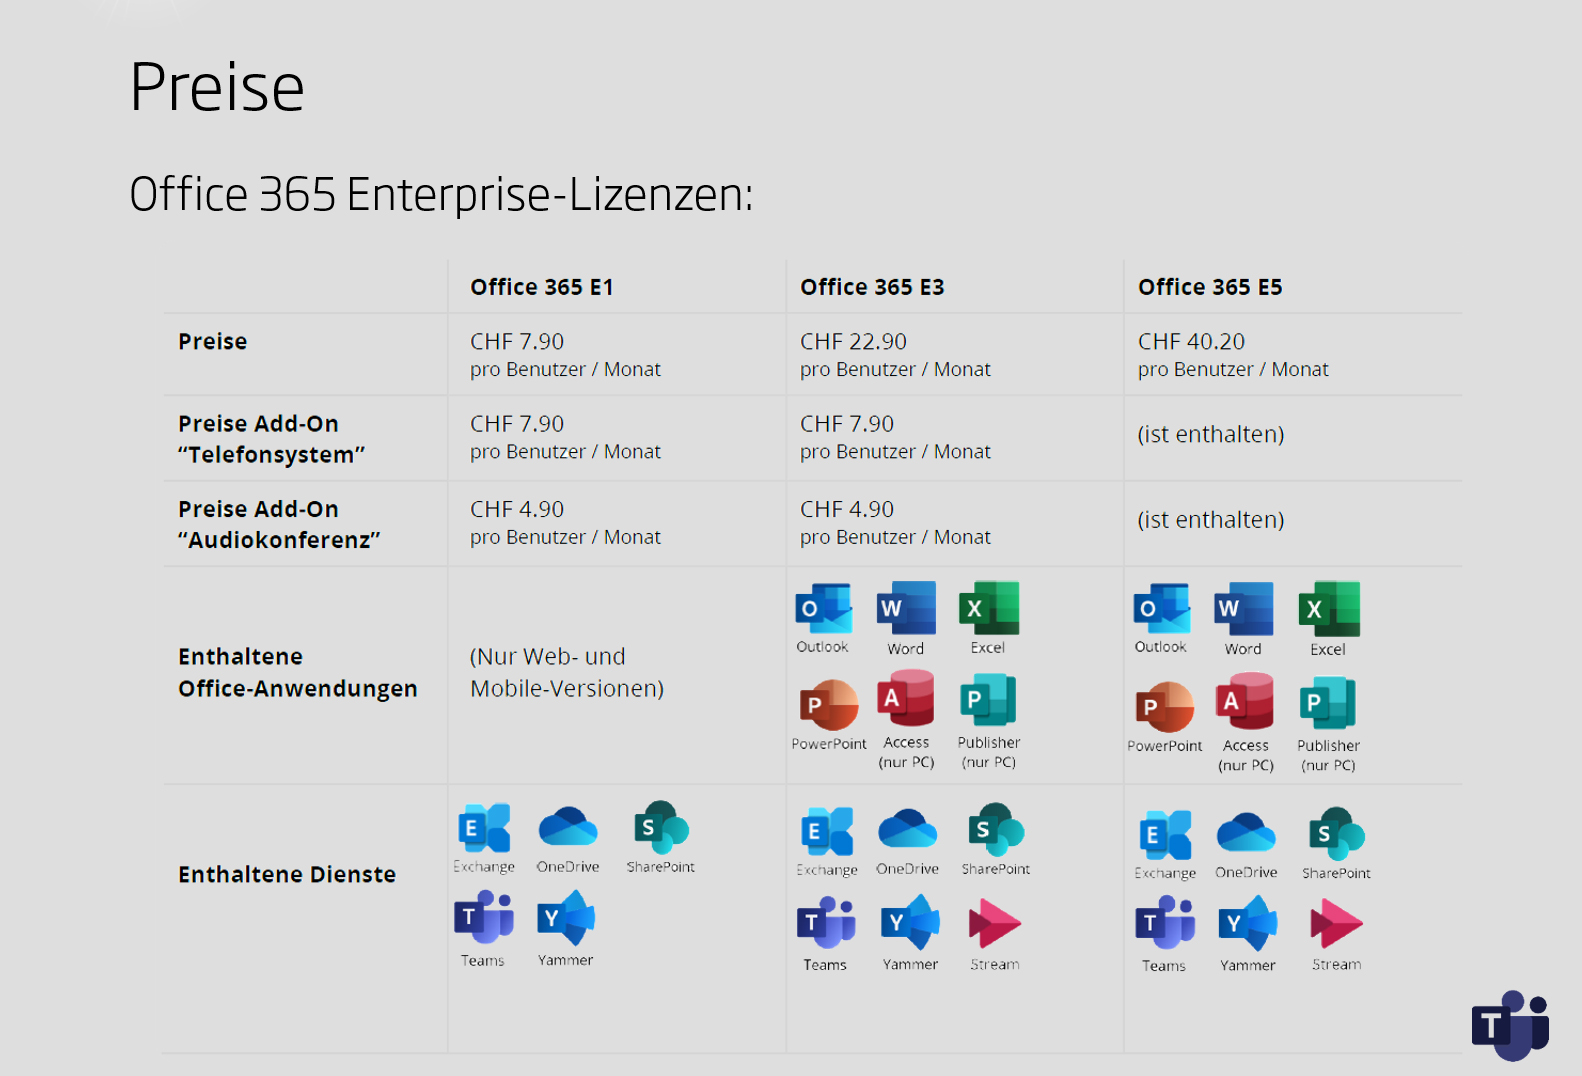 Preise Office 365 Enterprise-Lizenzen